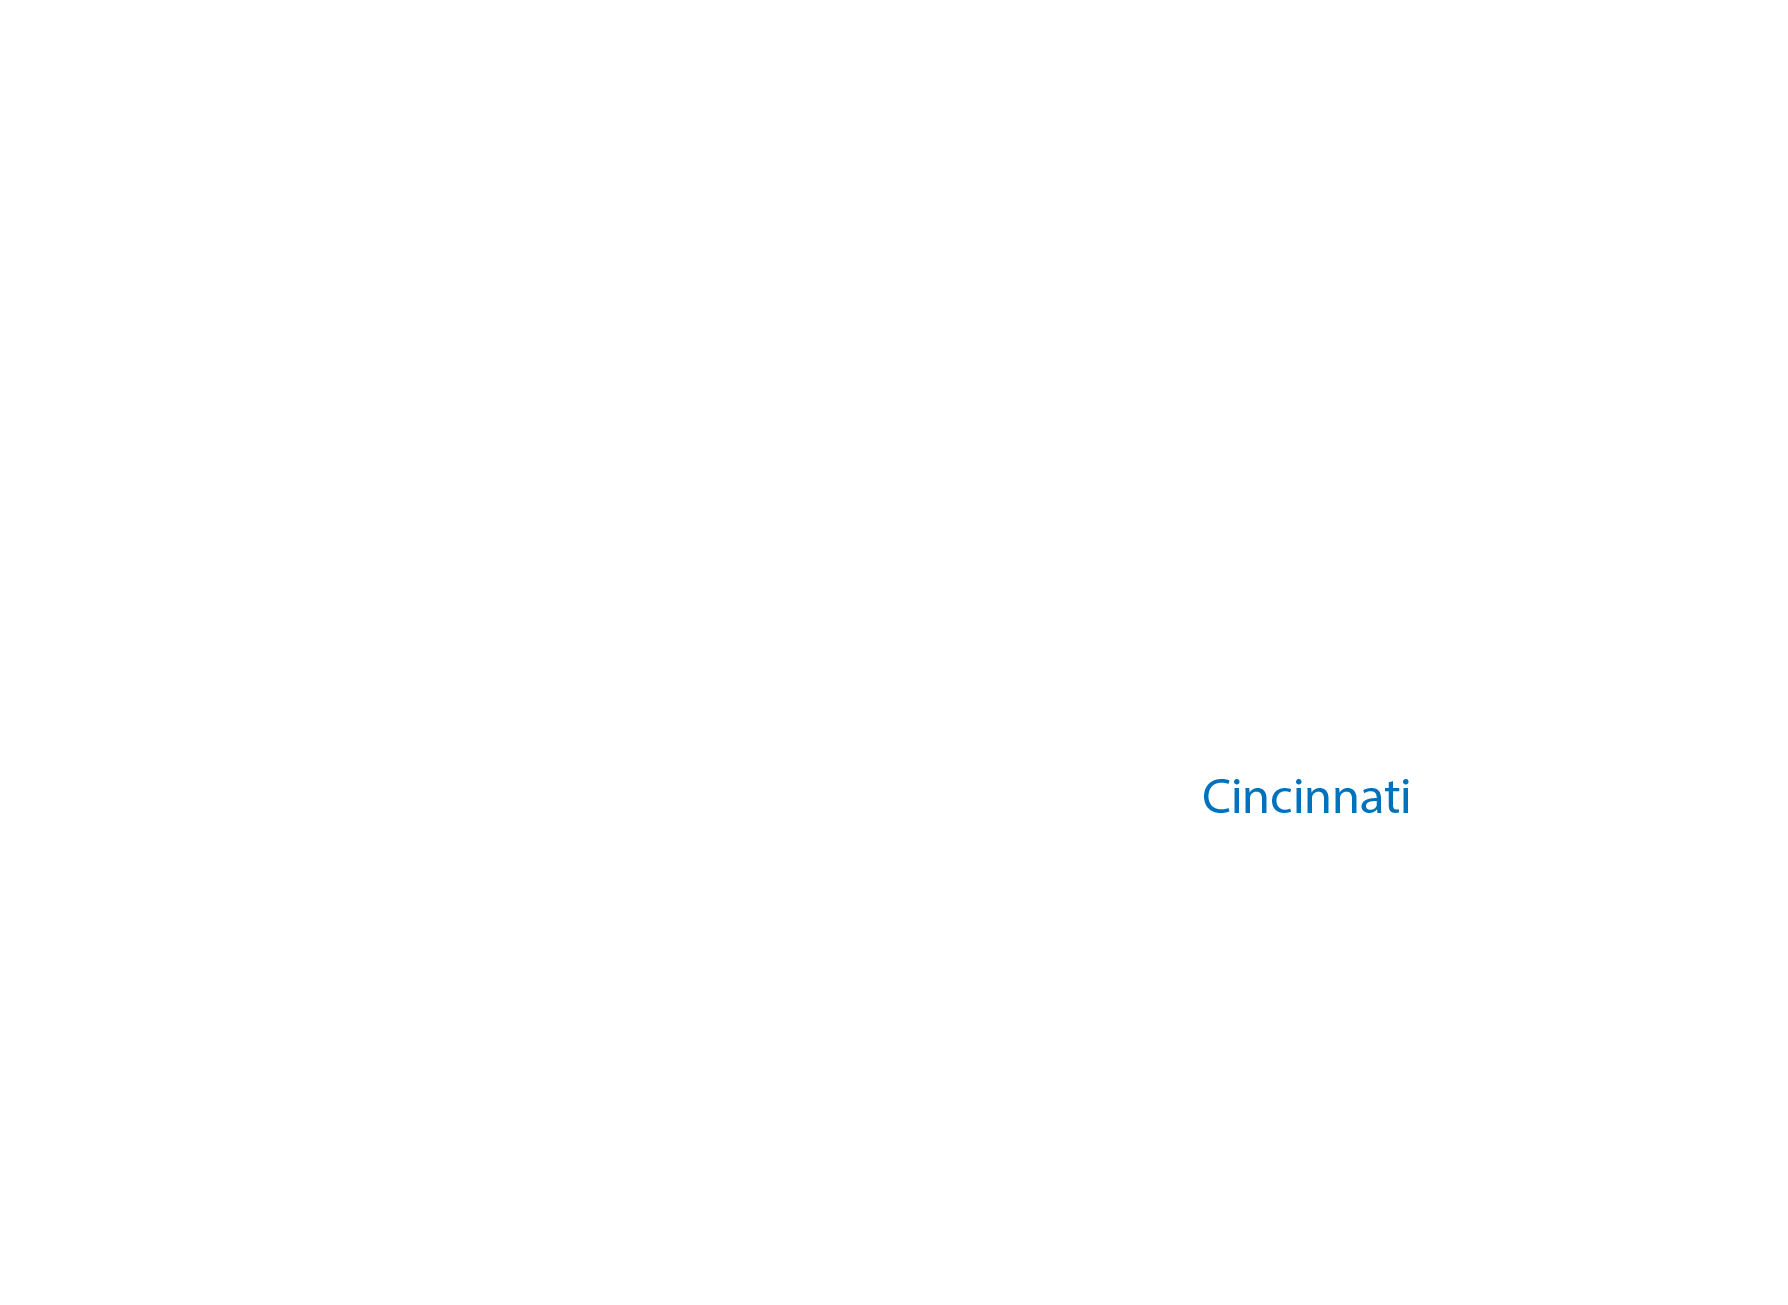 Cincinnati label